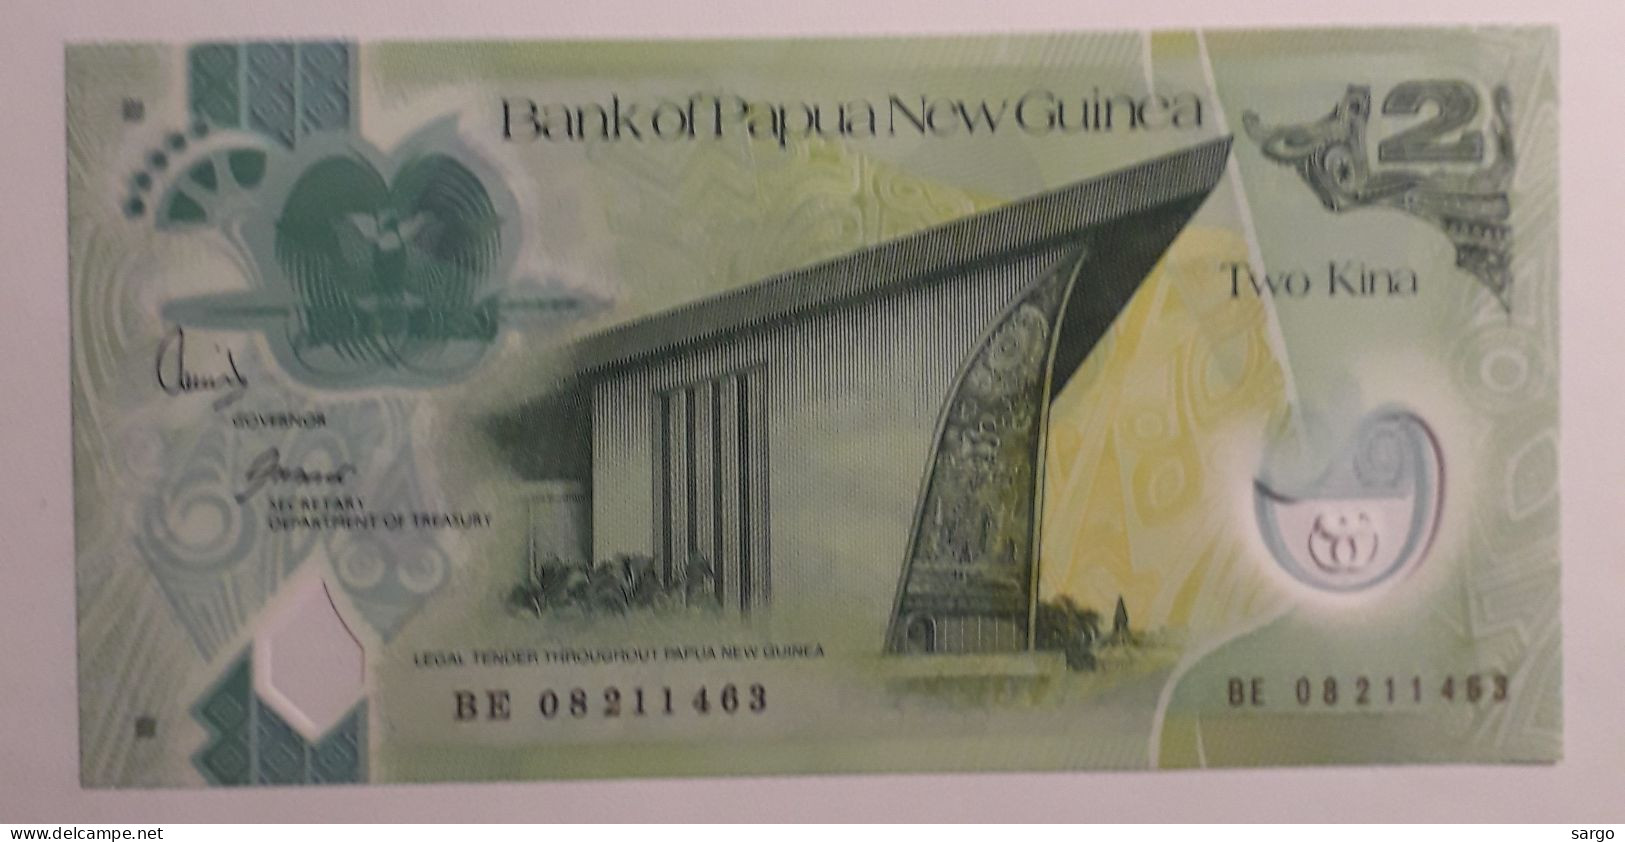 PAPUA NEW GUINEA - 2 KINA - 2007-2014 - UNCIRC P 38 - POLYMER - BANKNOTES - PAPER MONEY - CARTAMONETA - - Papua Nuova Guinea